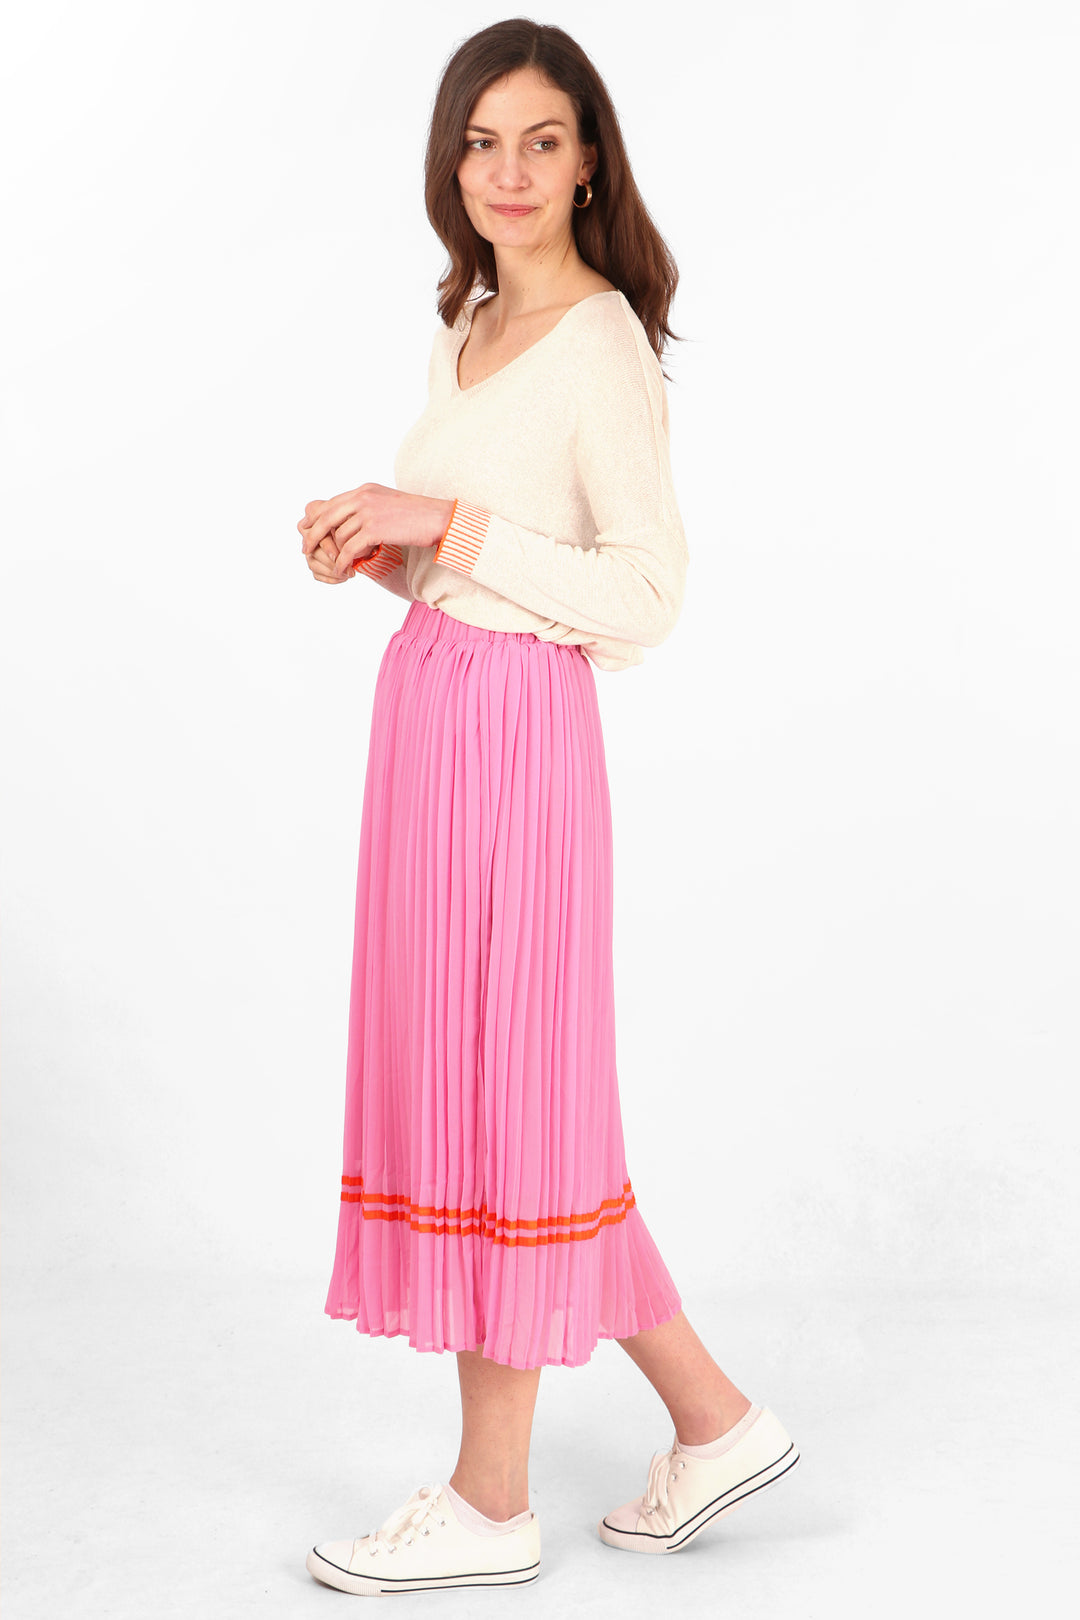 model wearing a pink pleated midi skirt with an orange ribbon stripe trim above the hem